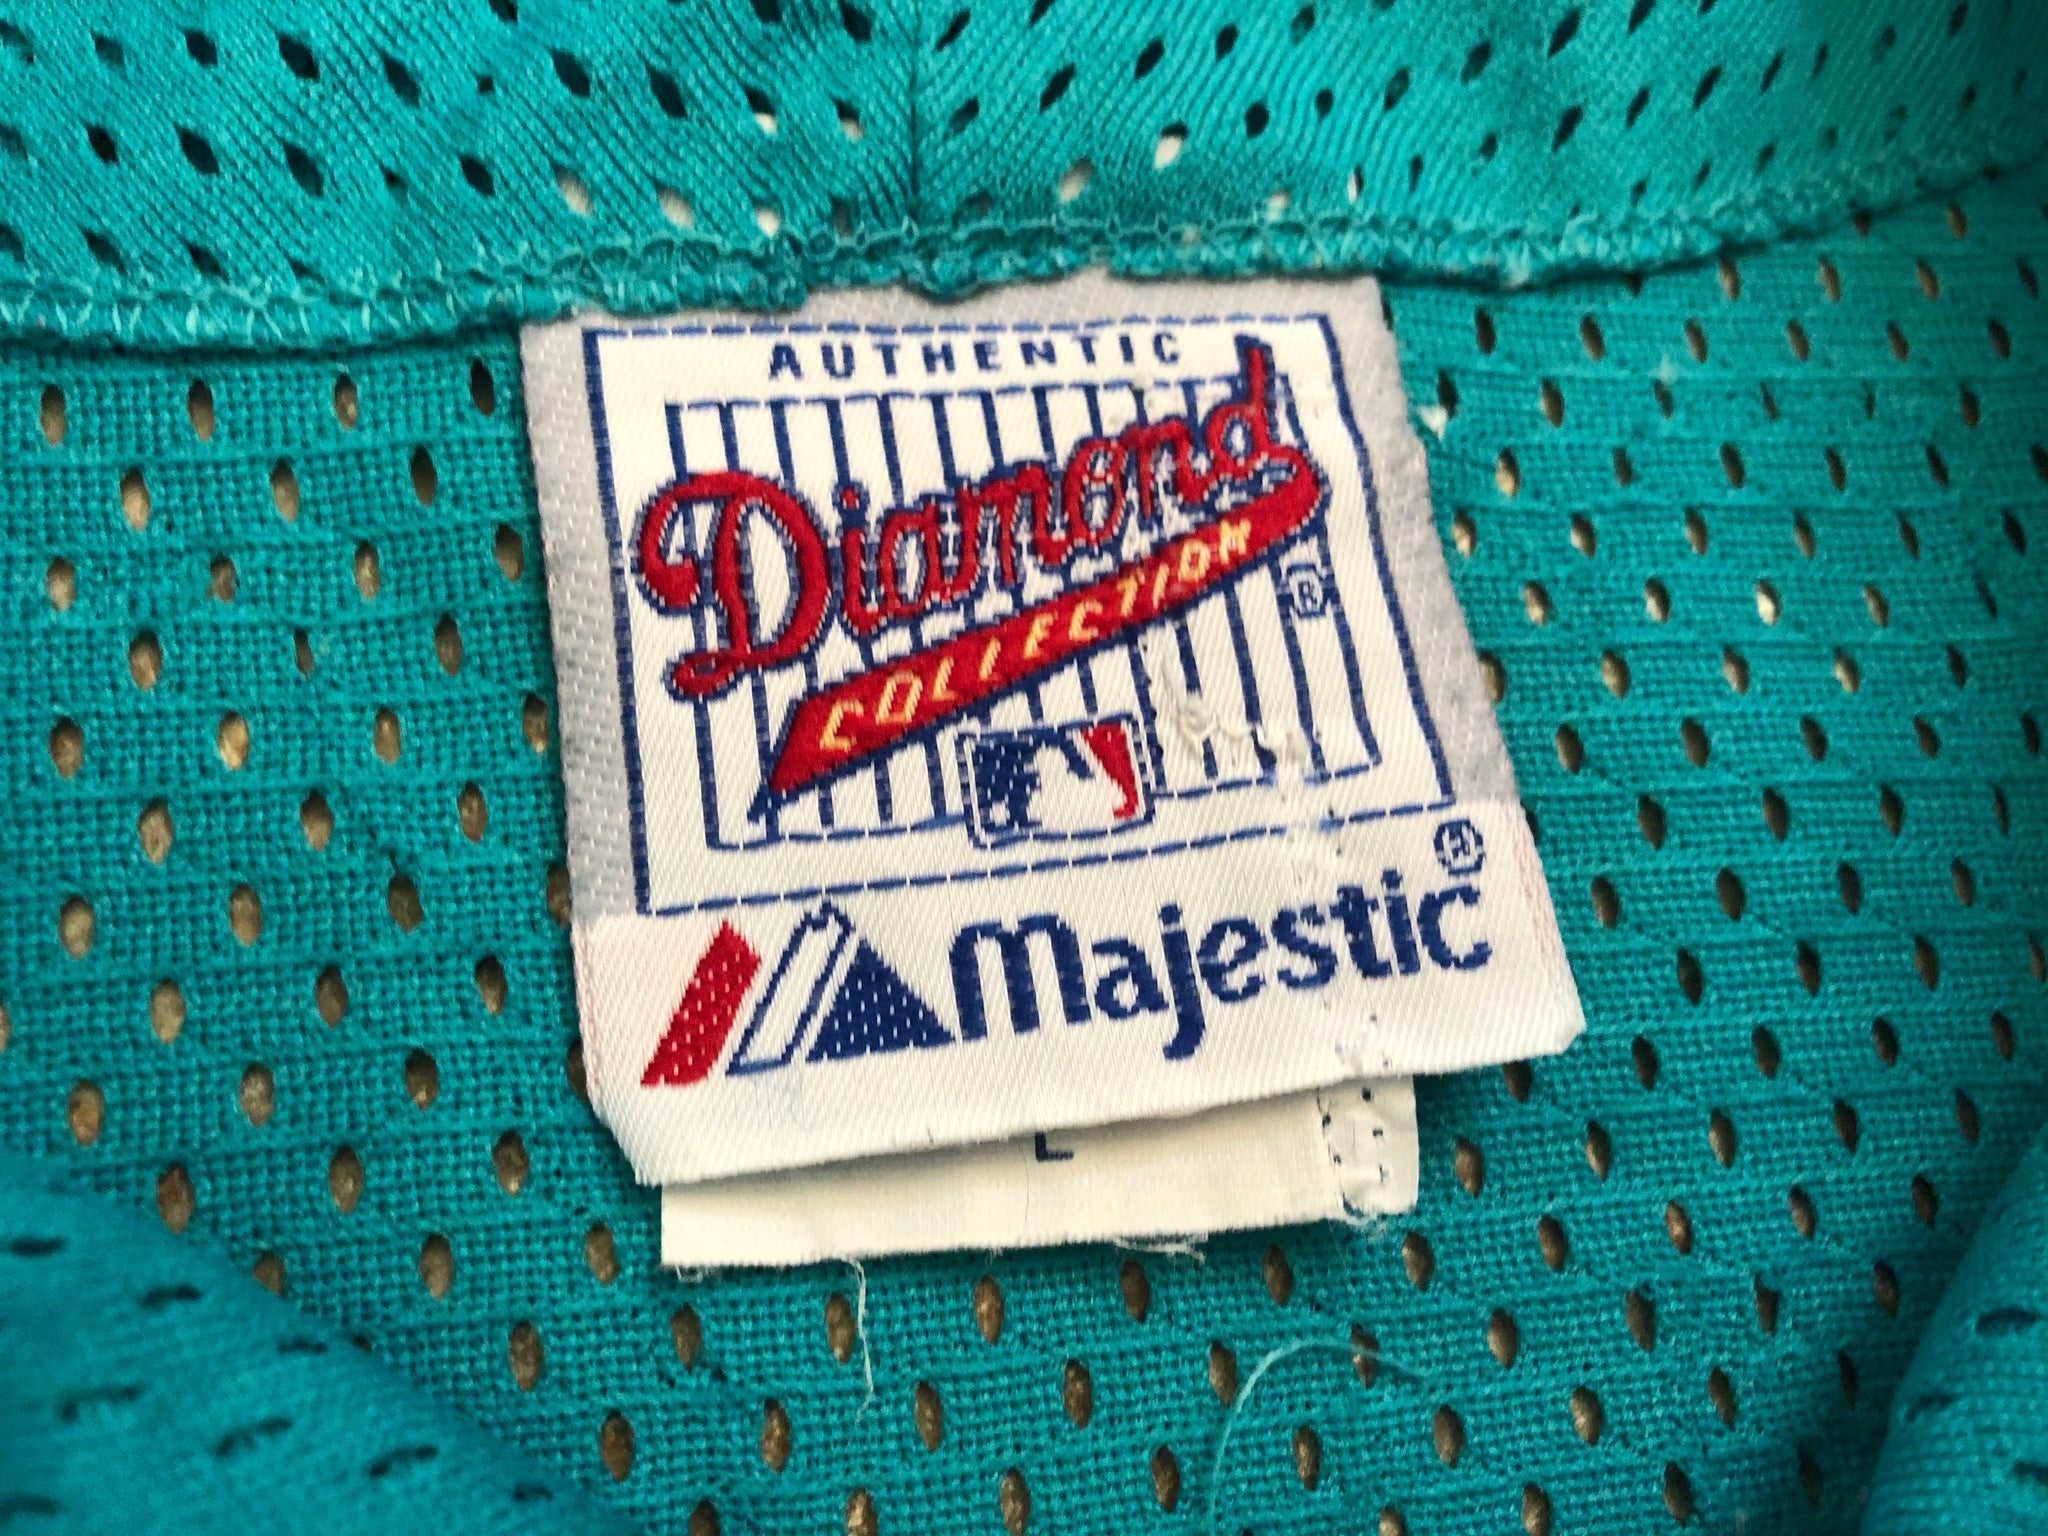 Authentic Miami Marlins Vintage Majestic MLB Baseball Stitched Jersey  Florida